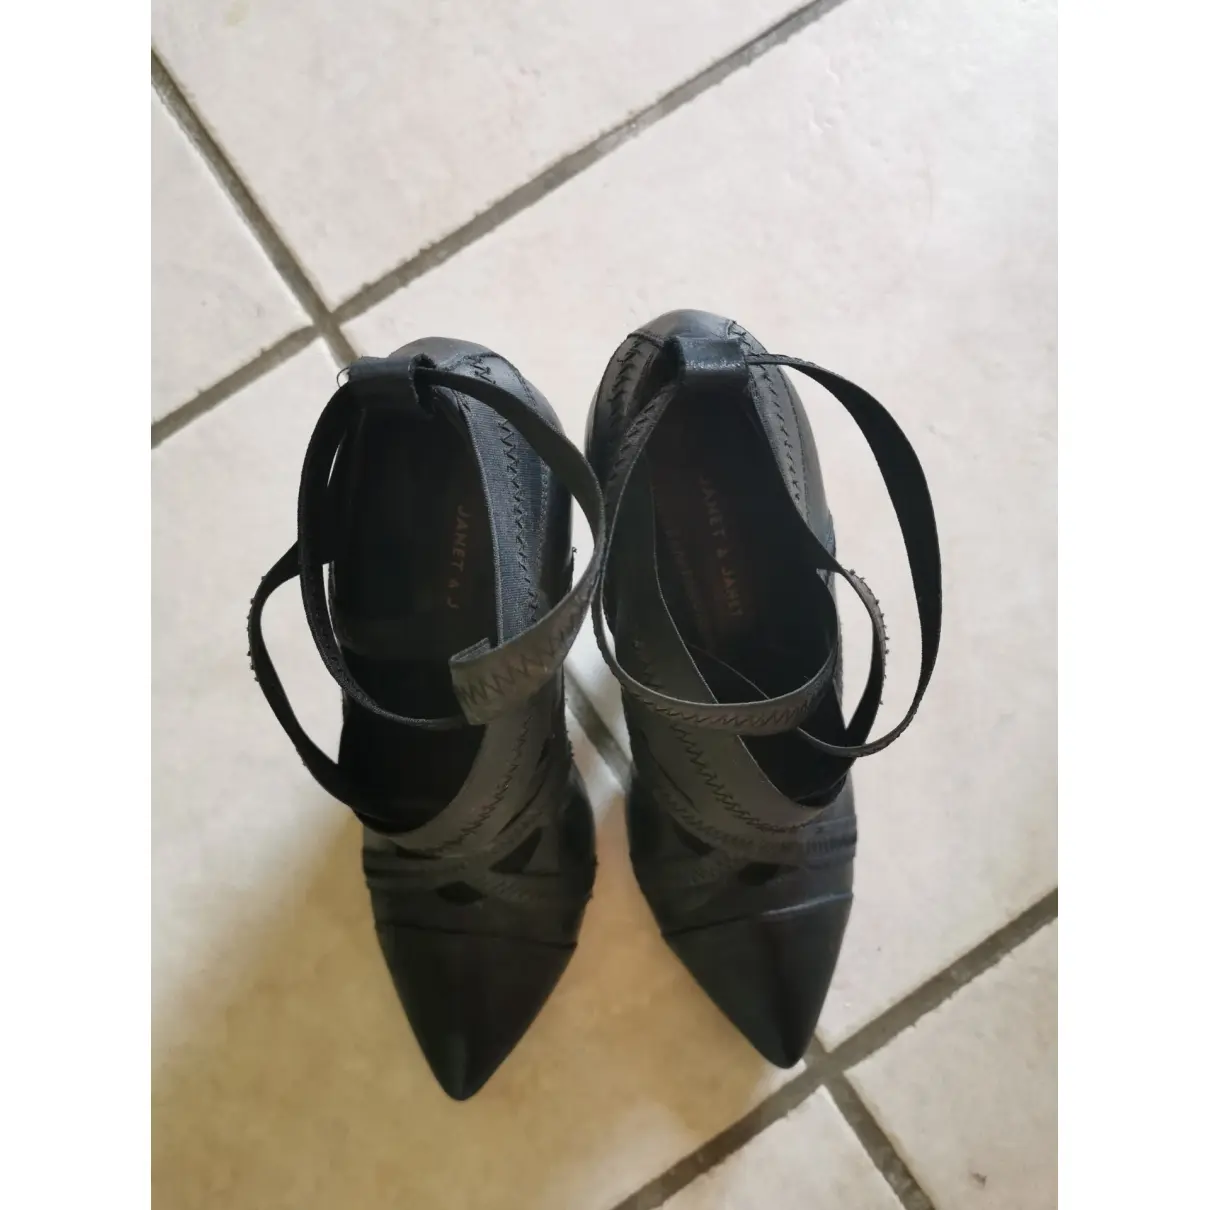 Buy Janet & Janet Leather heels online